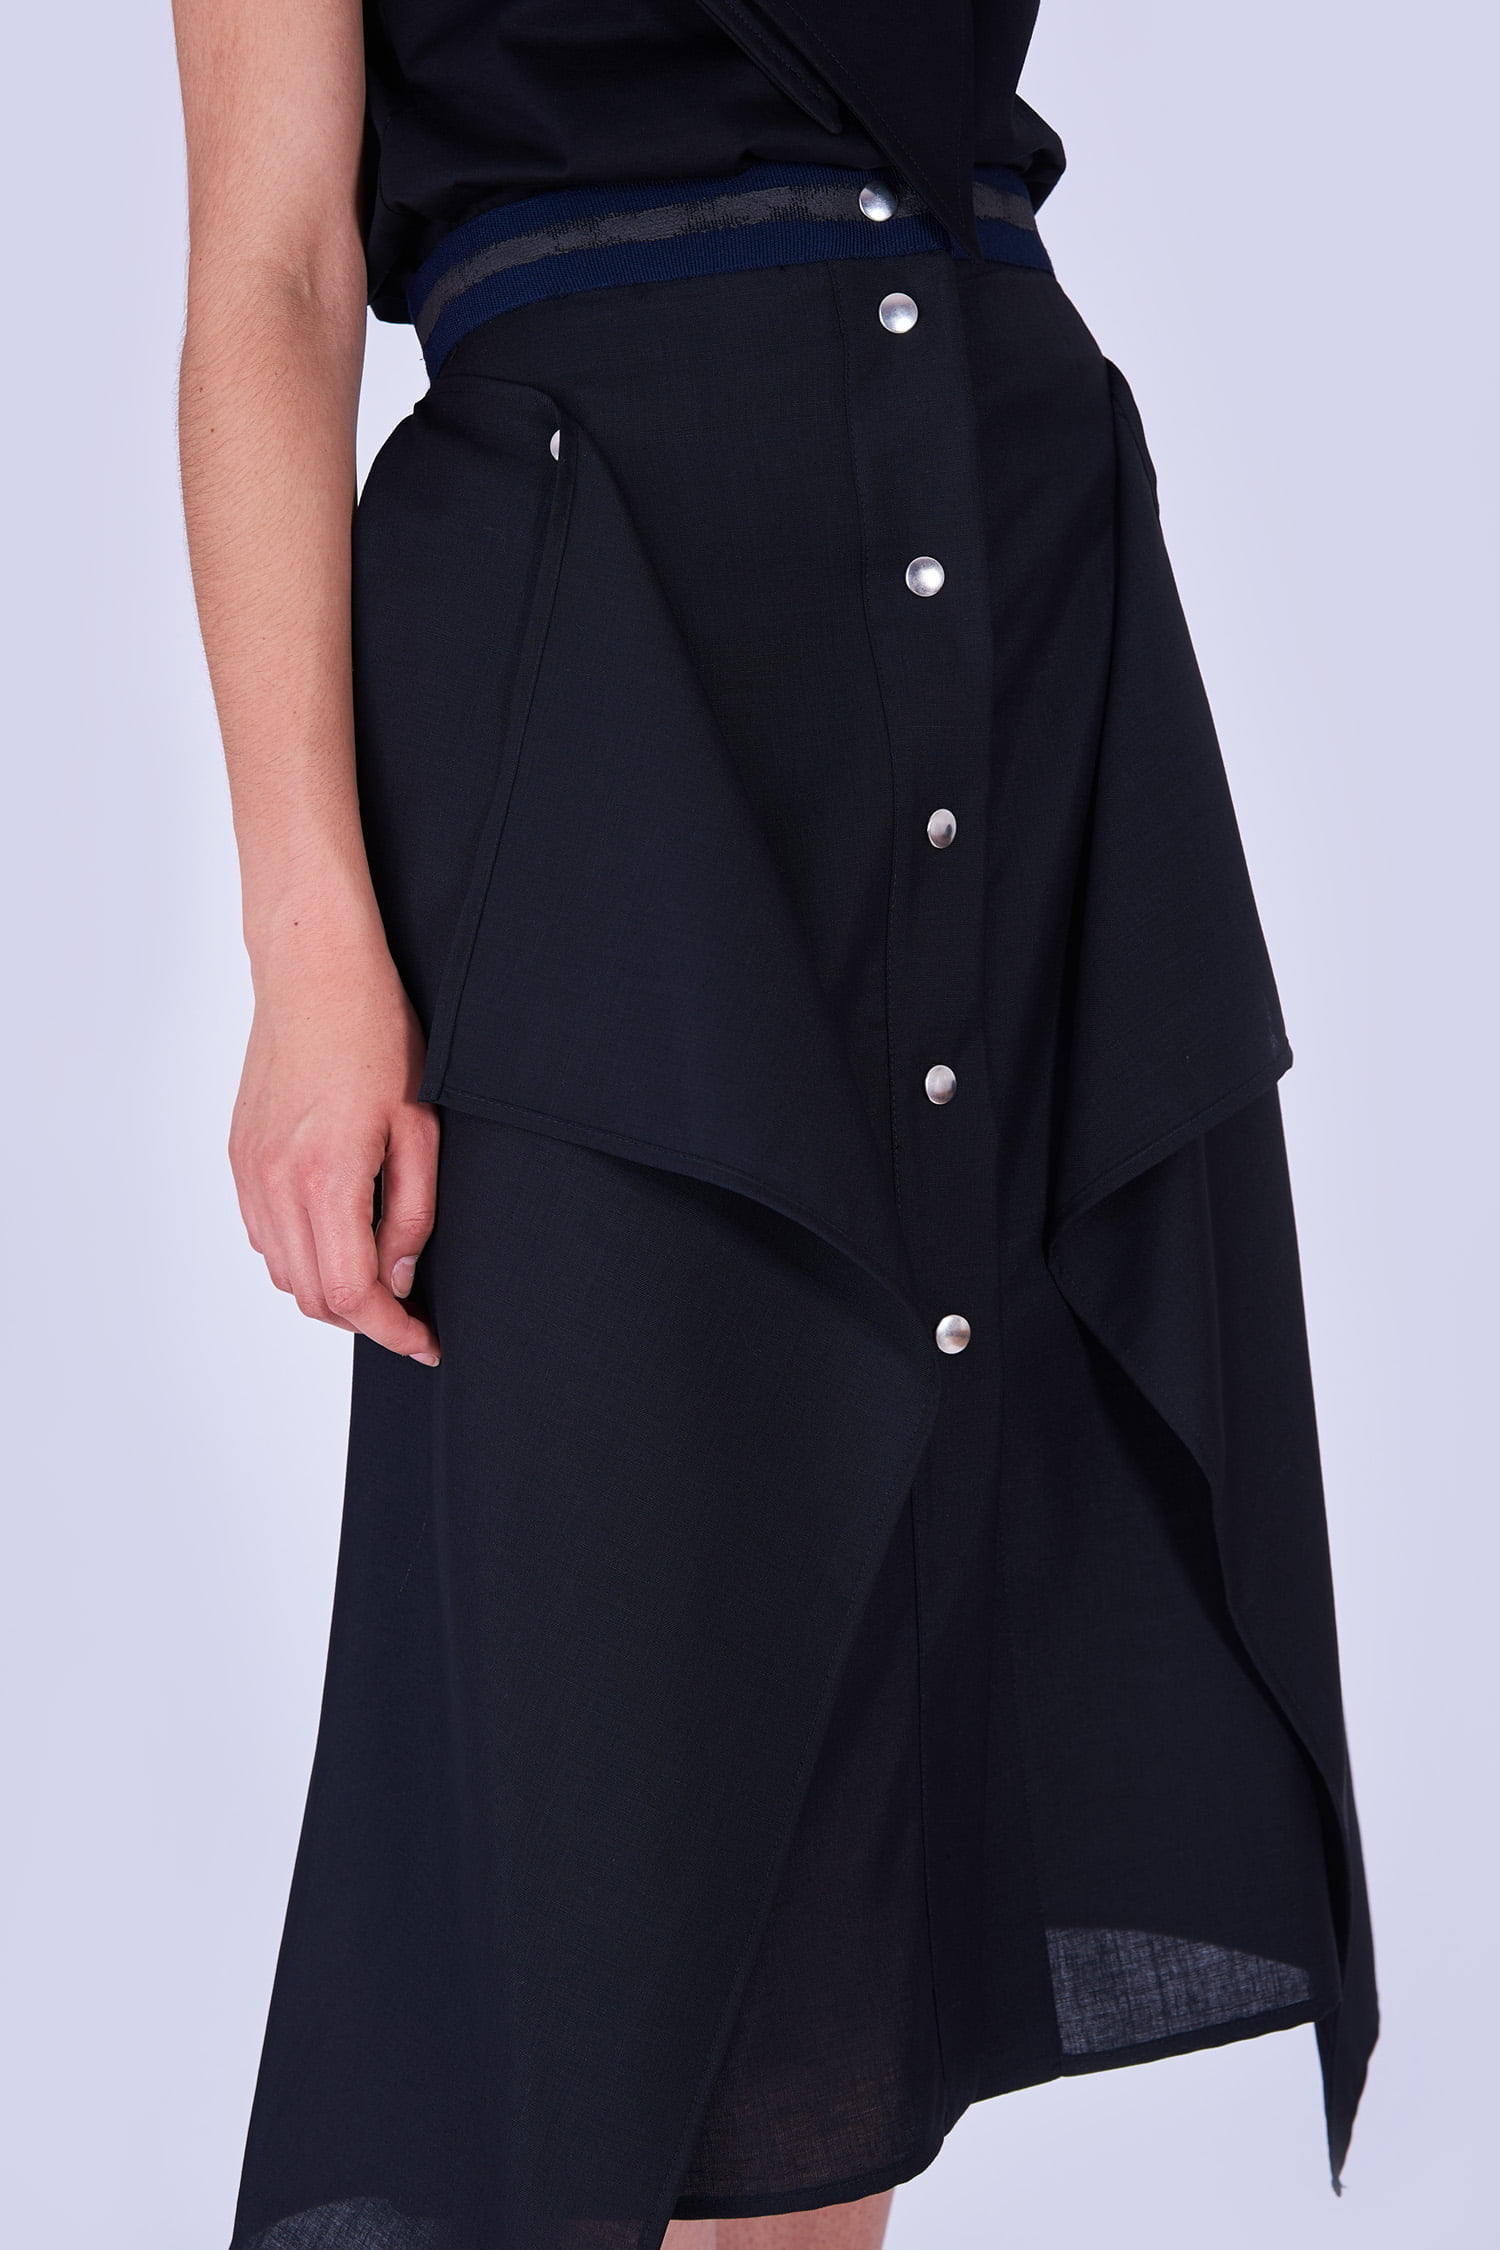 Acephala Fw19 20 Black Skirt Draped Czarna Spodnica Drapowana Detail 2